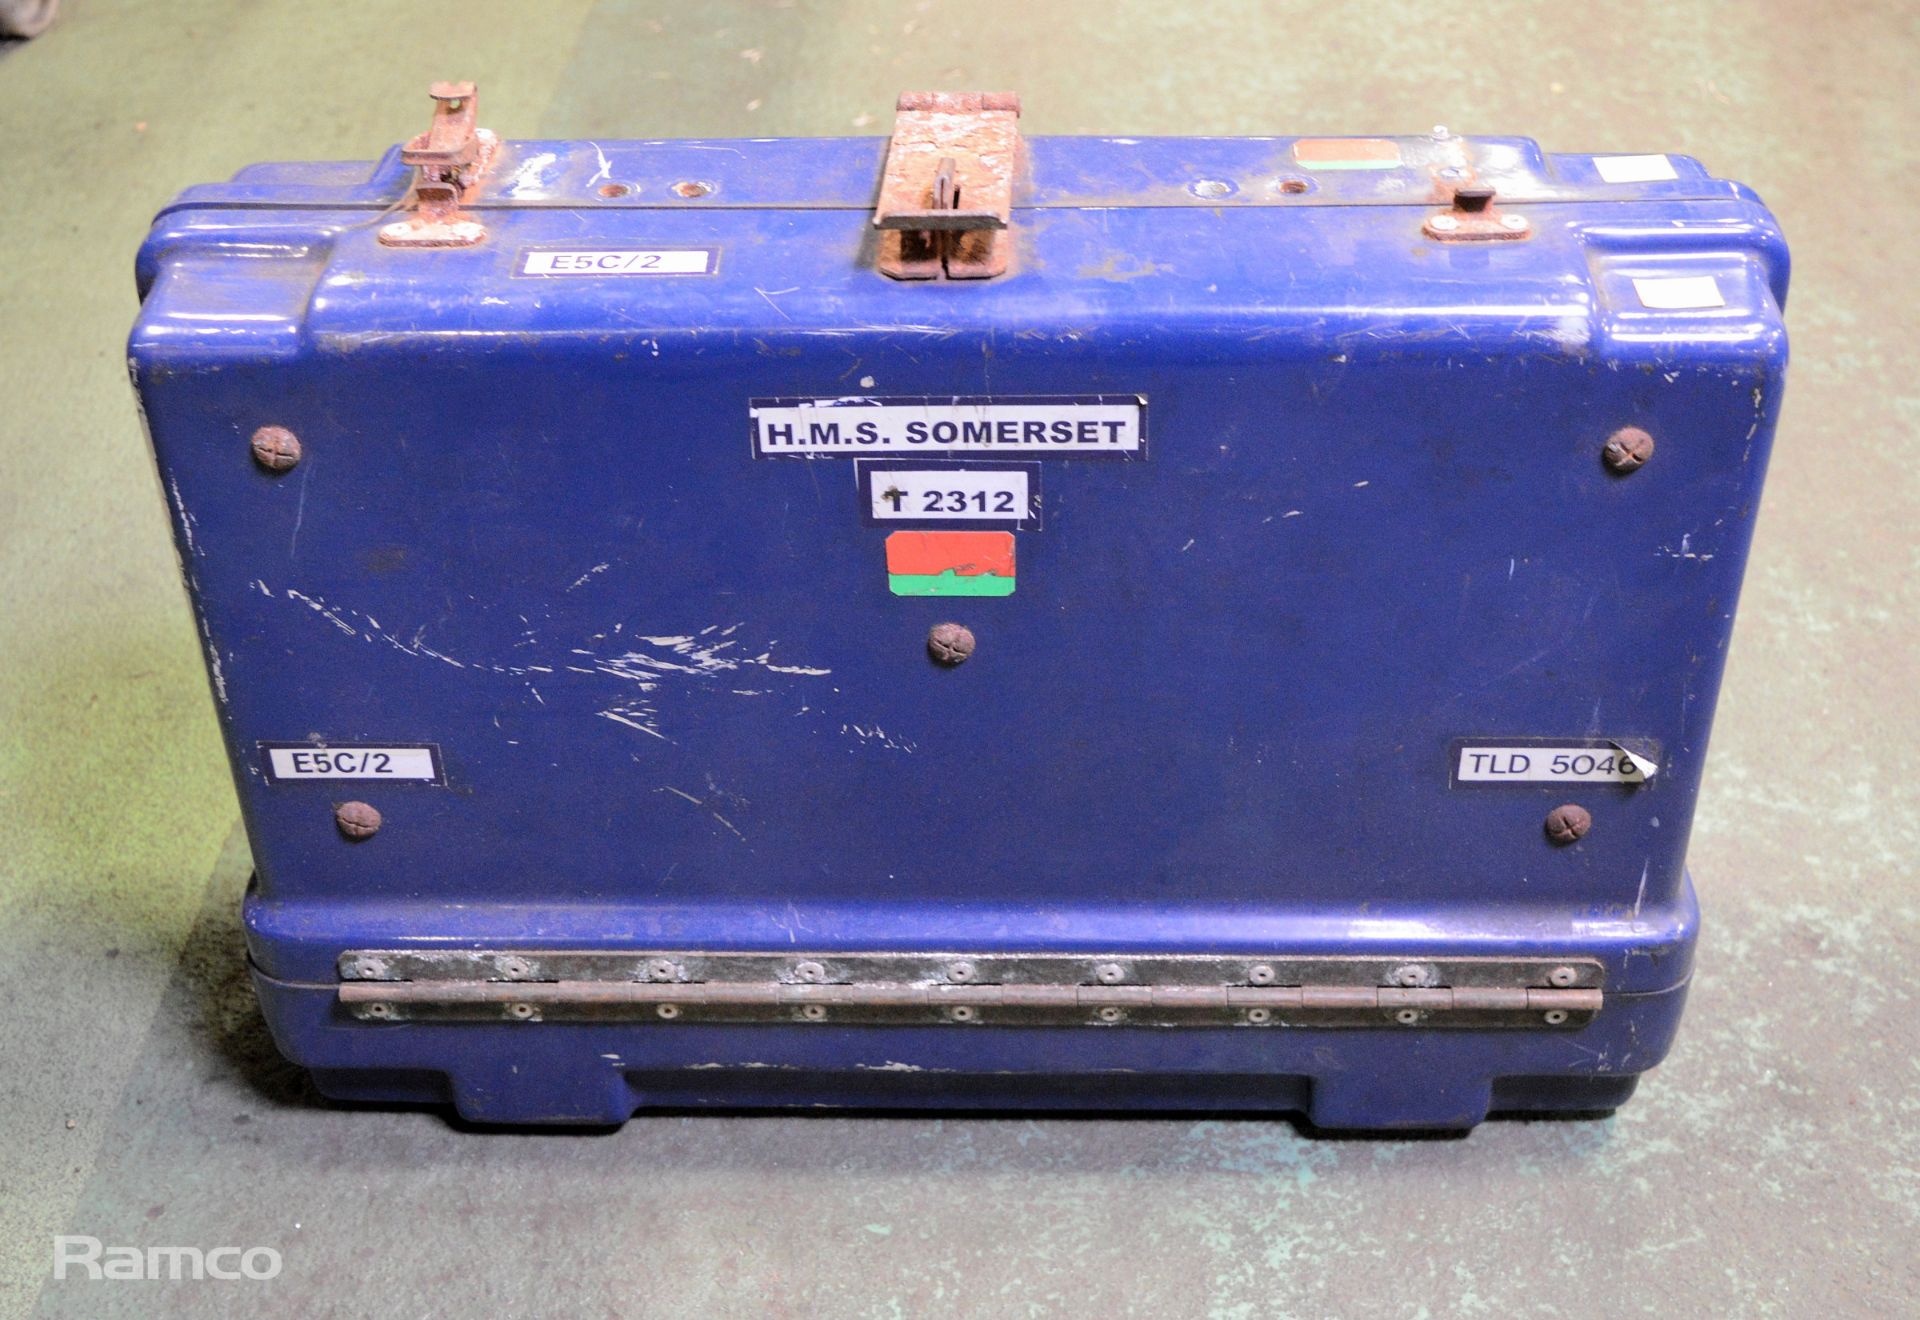 Blue Fiberglass tool box L52 x W16 x H40cm - Incomplete - Image 5 of 5